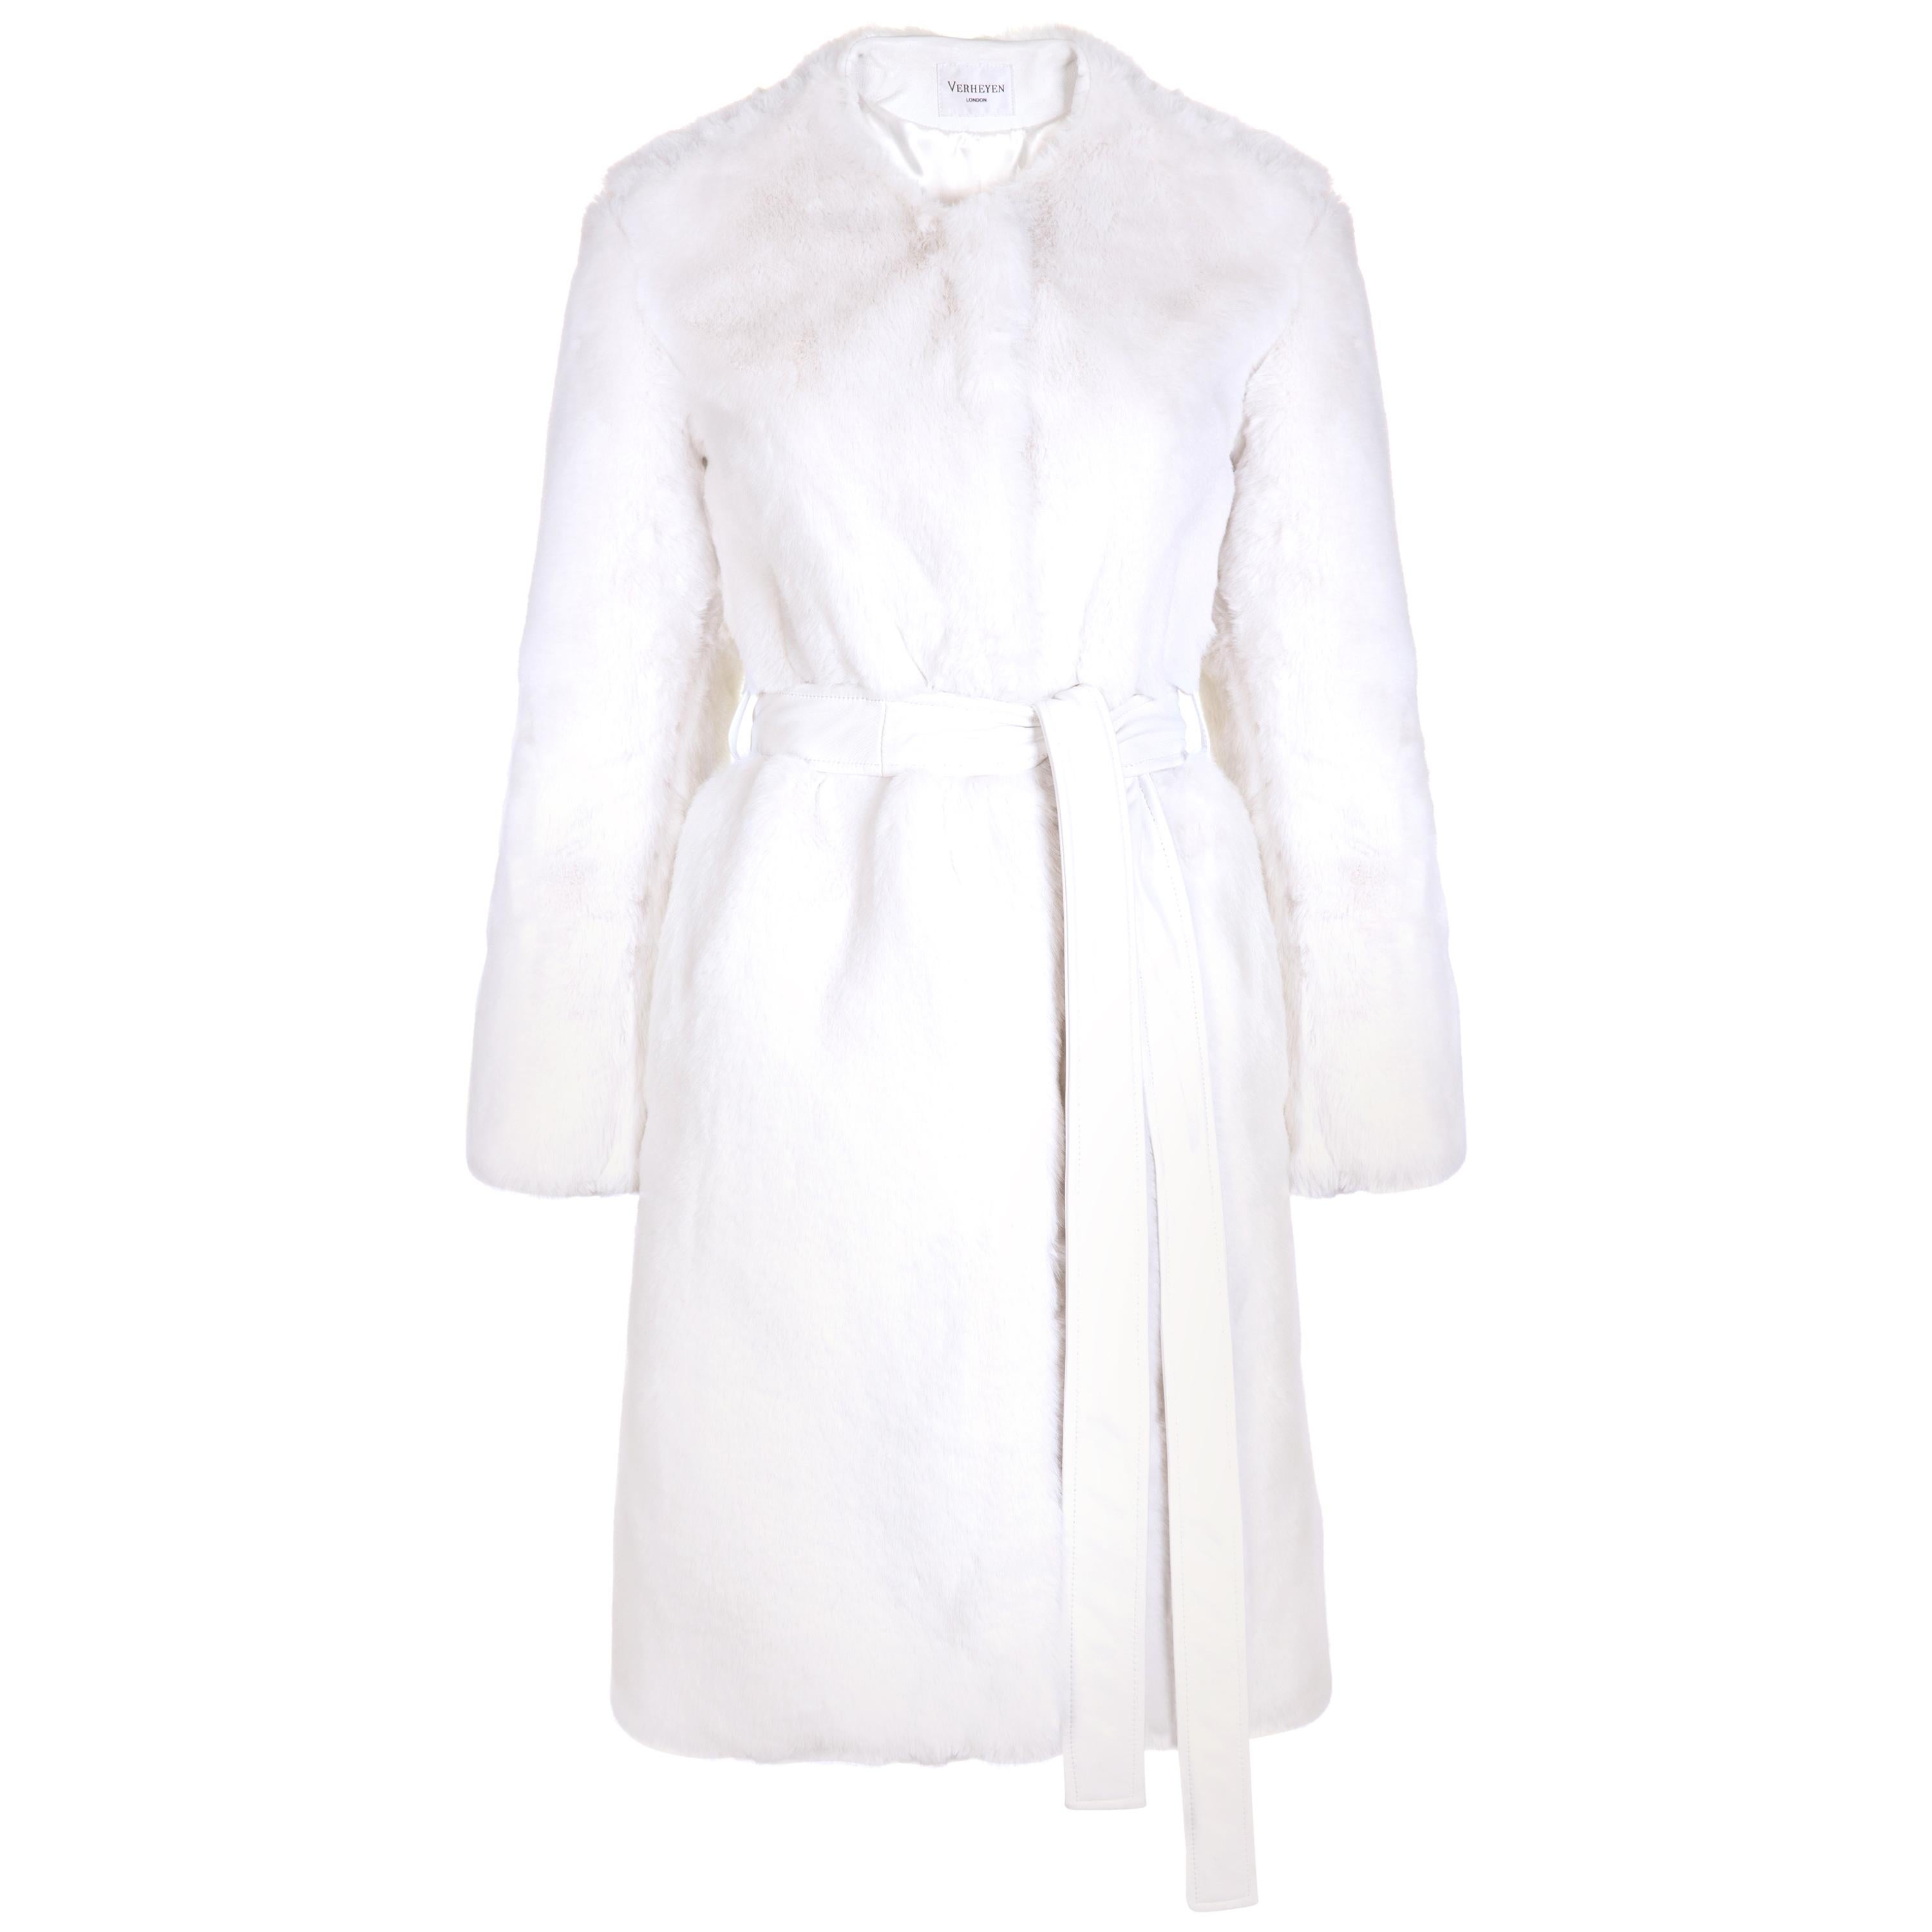 Verheyen London Serena  Collarless Faux Fur Coat in White - Size uk 12 For Sale